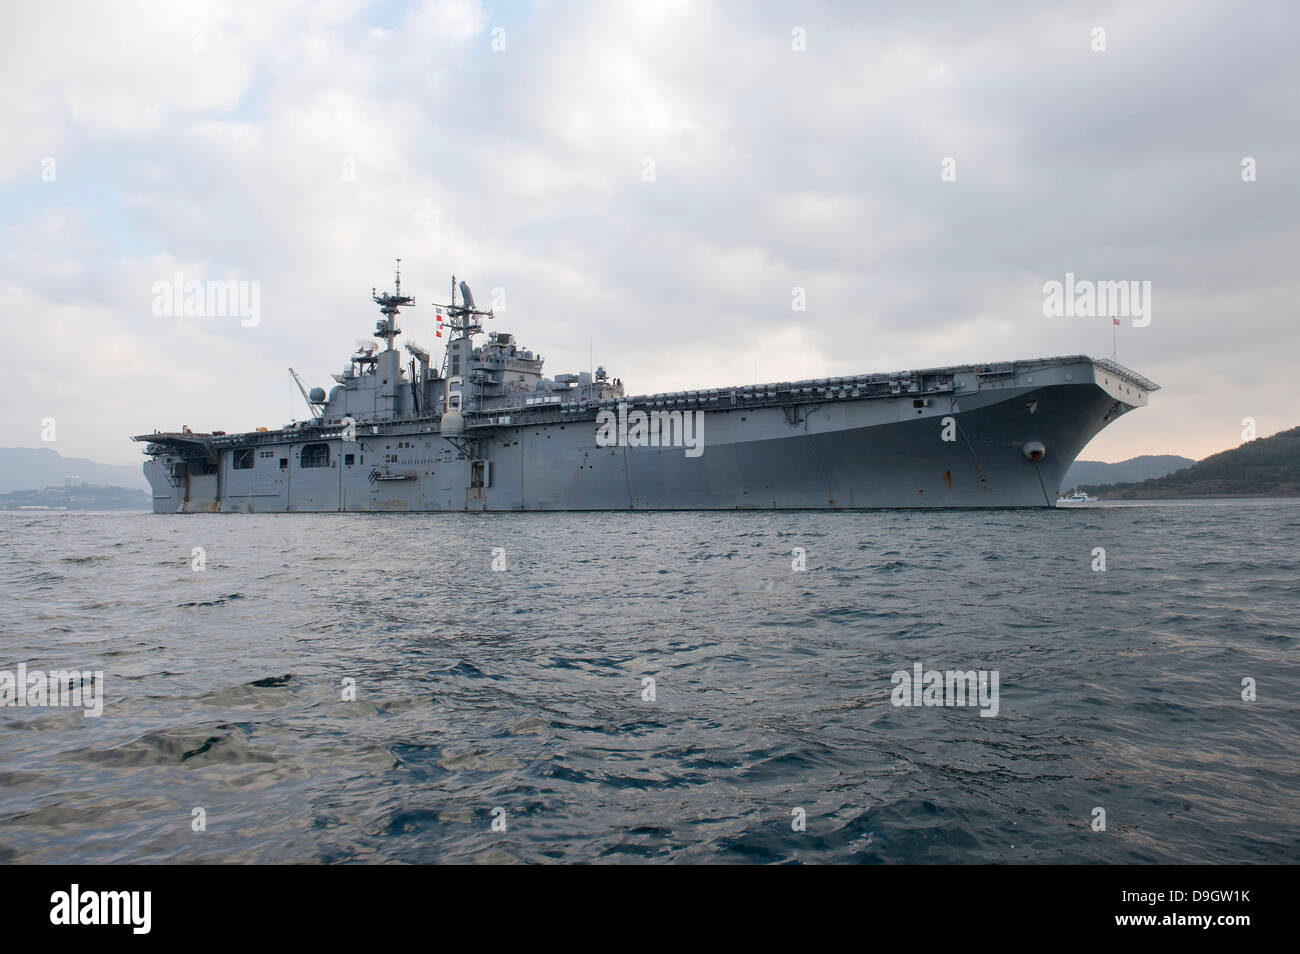 Sasebo, Japan, January 24, 2012 - The amphibious assault ship USS Bonhomme Richard (LHD 6) sits at anchor in Sasebo harbor. Stock Photo